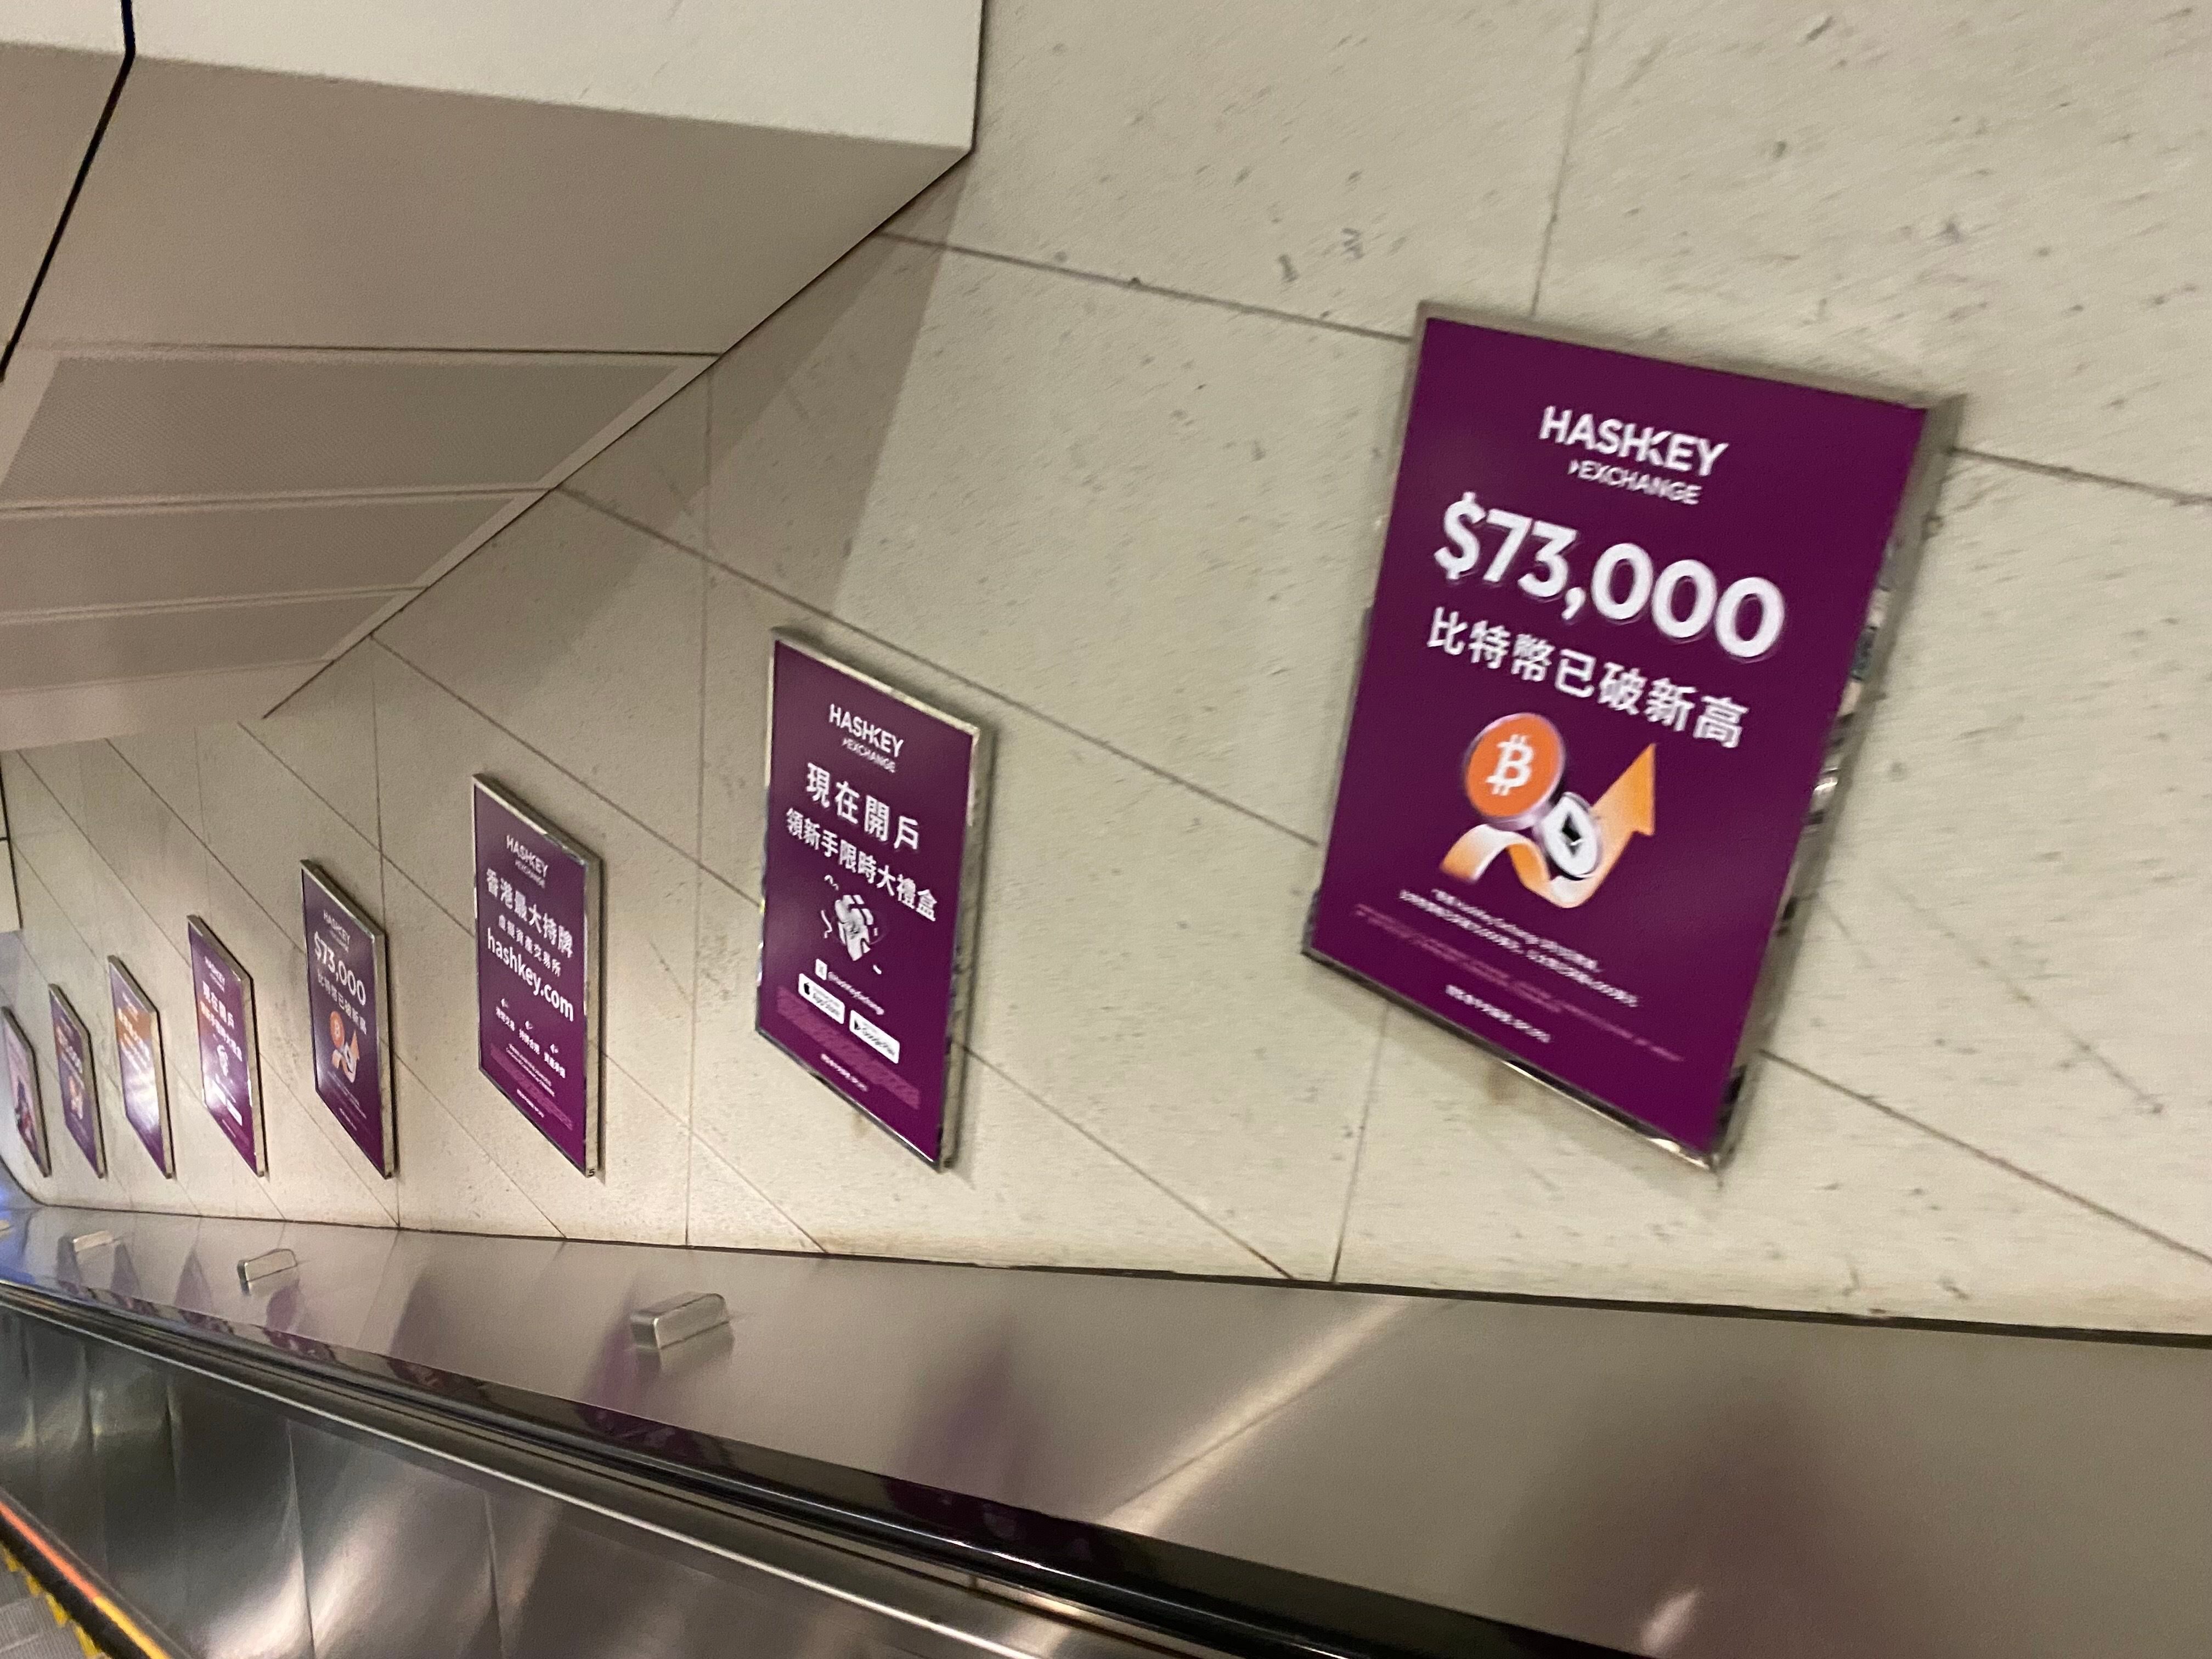 Hashkey reminds Hongkongers that Bitcoin is up all the way down the escalator. Photo credit: Callan Quinn/ DL News